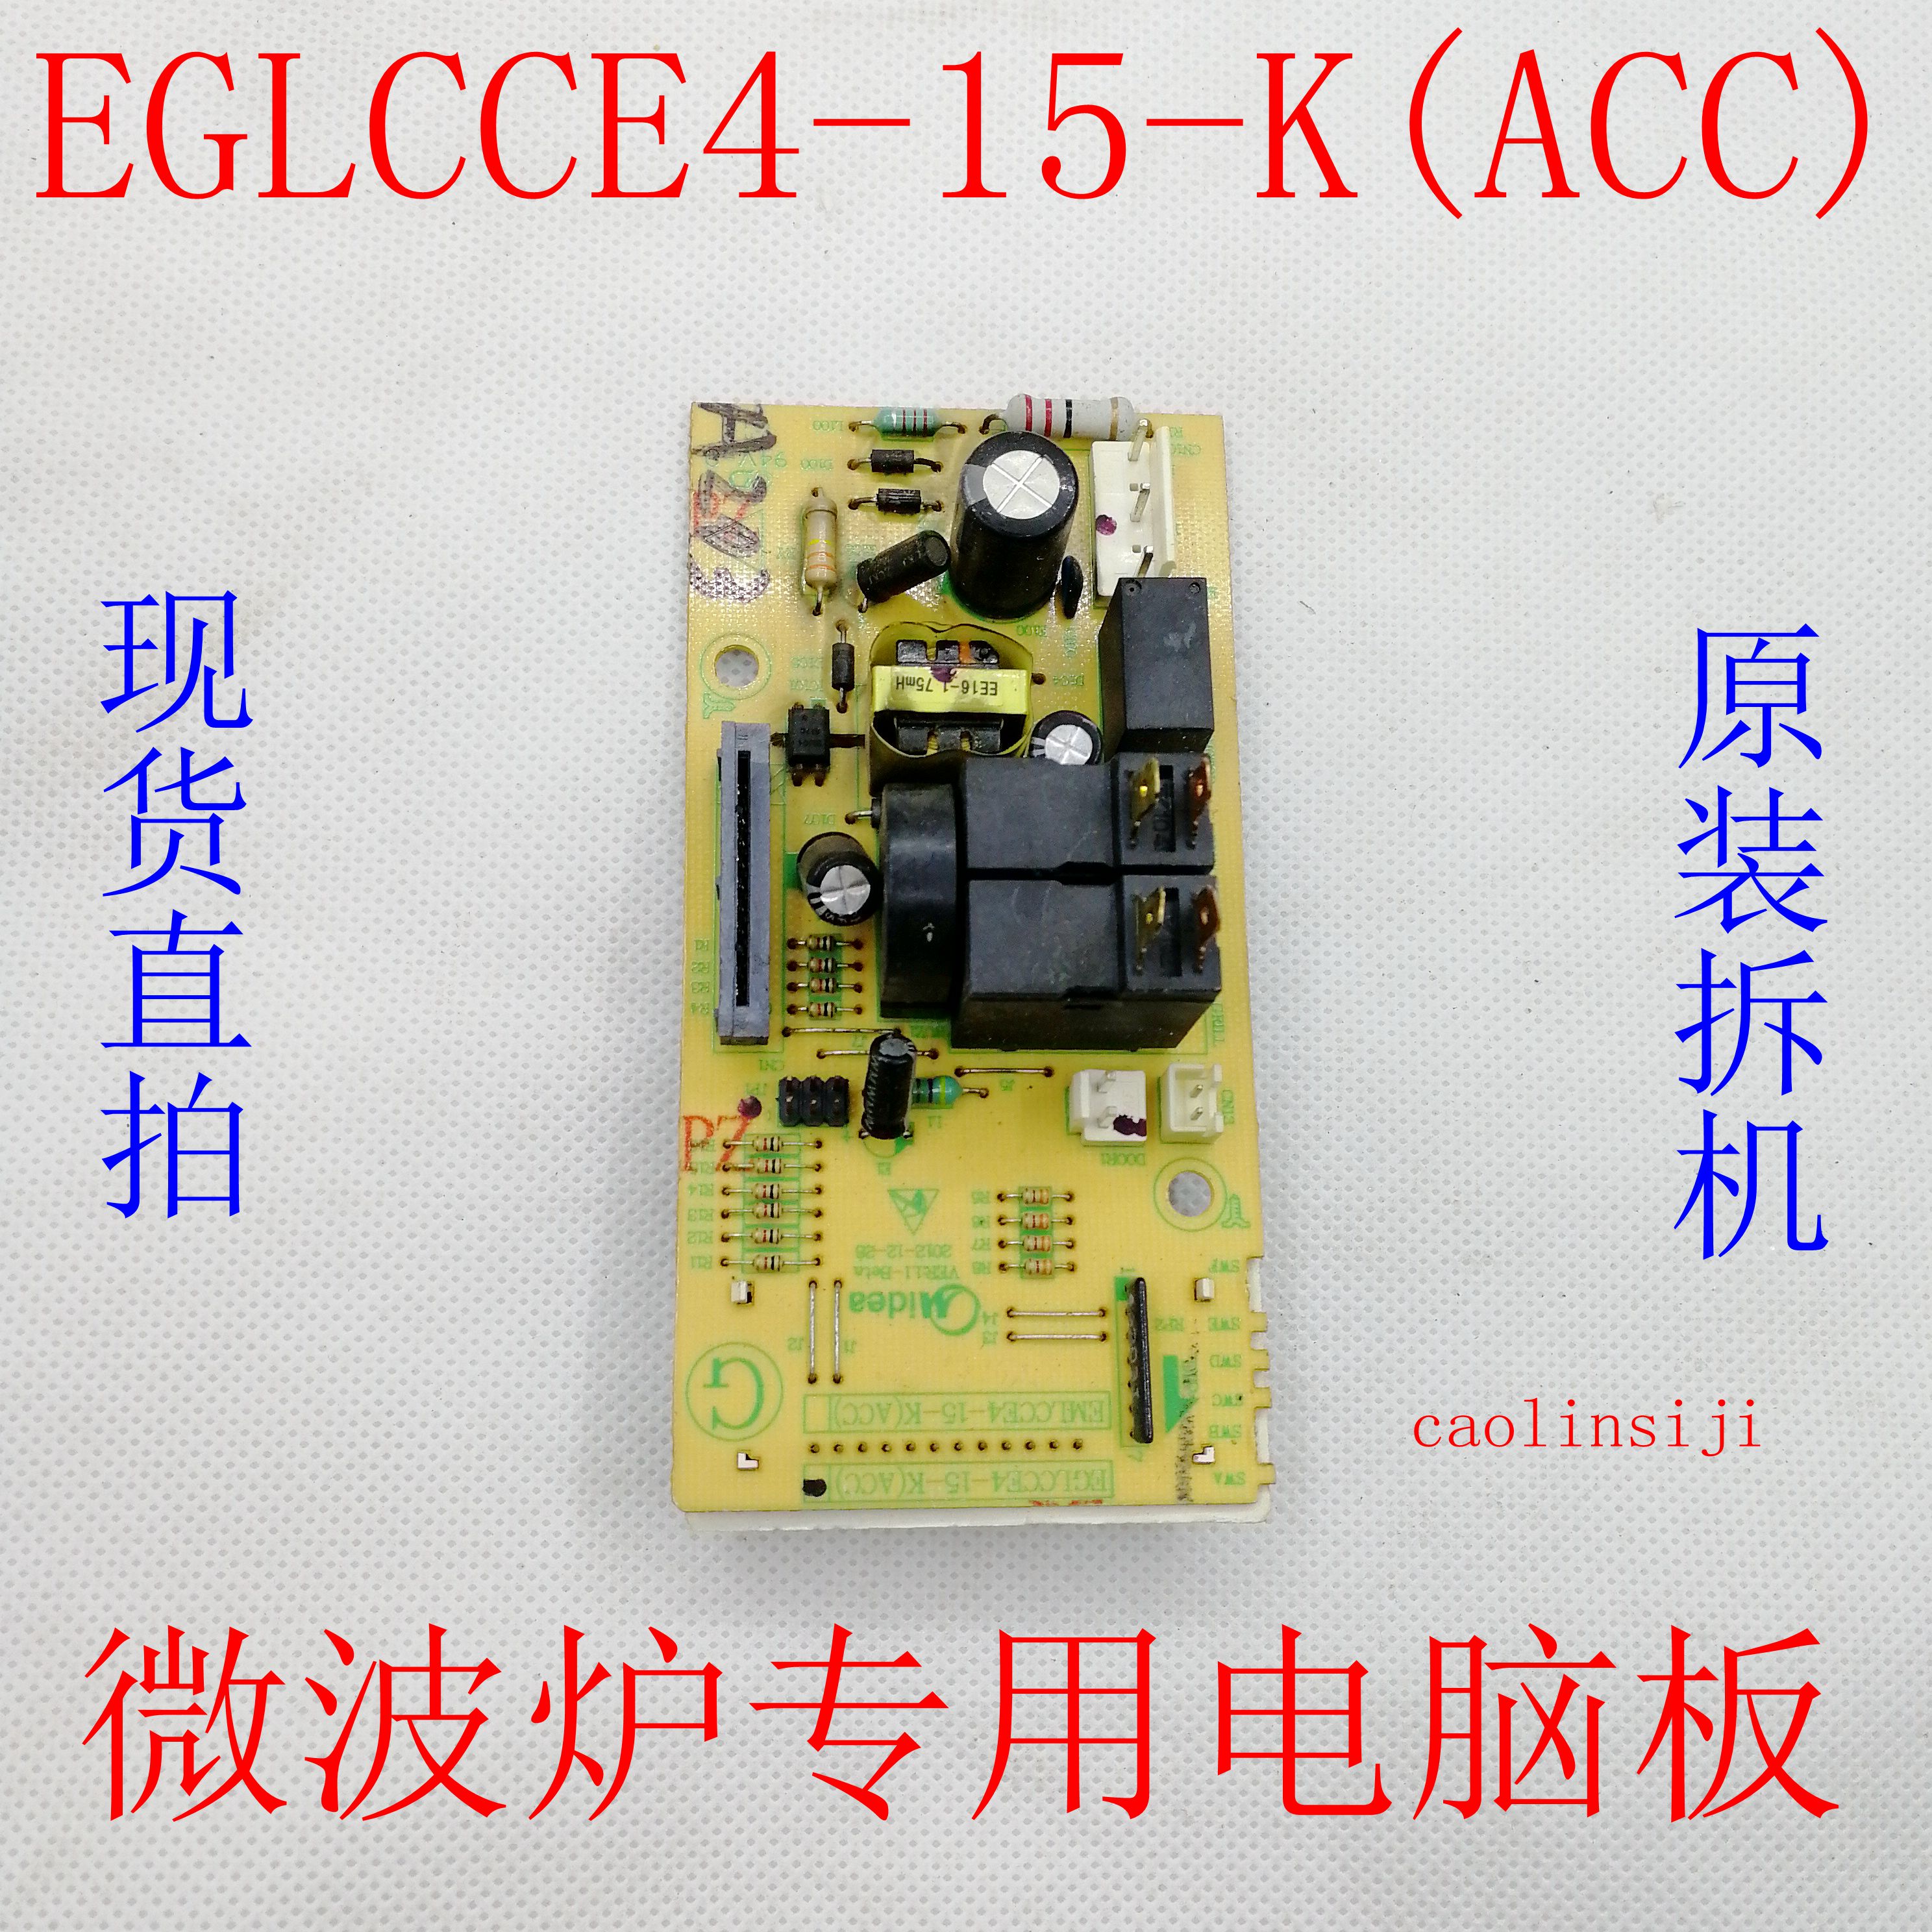  ص MIDEA ڷ ǻ  EGLCCE4-15-K EGLCCE4-15-K(ACC)-